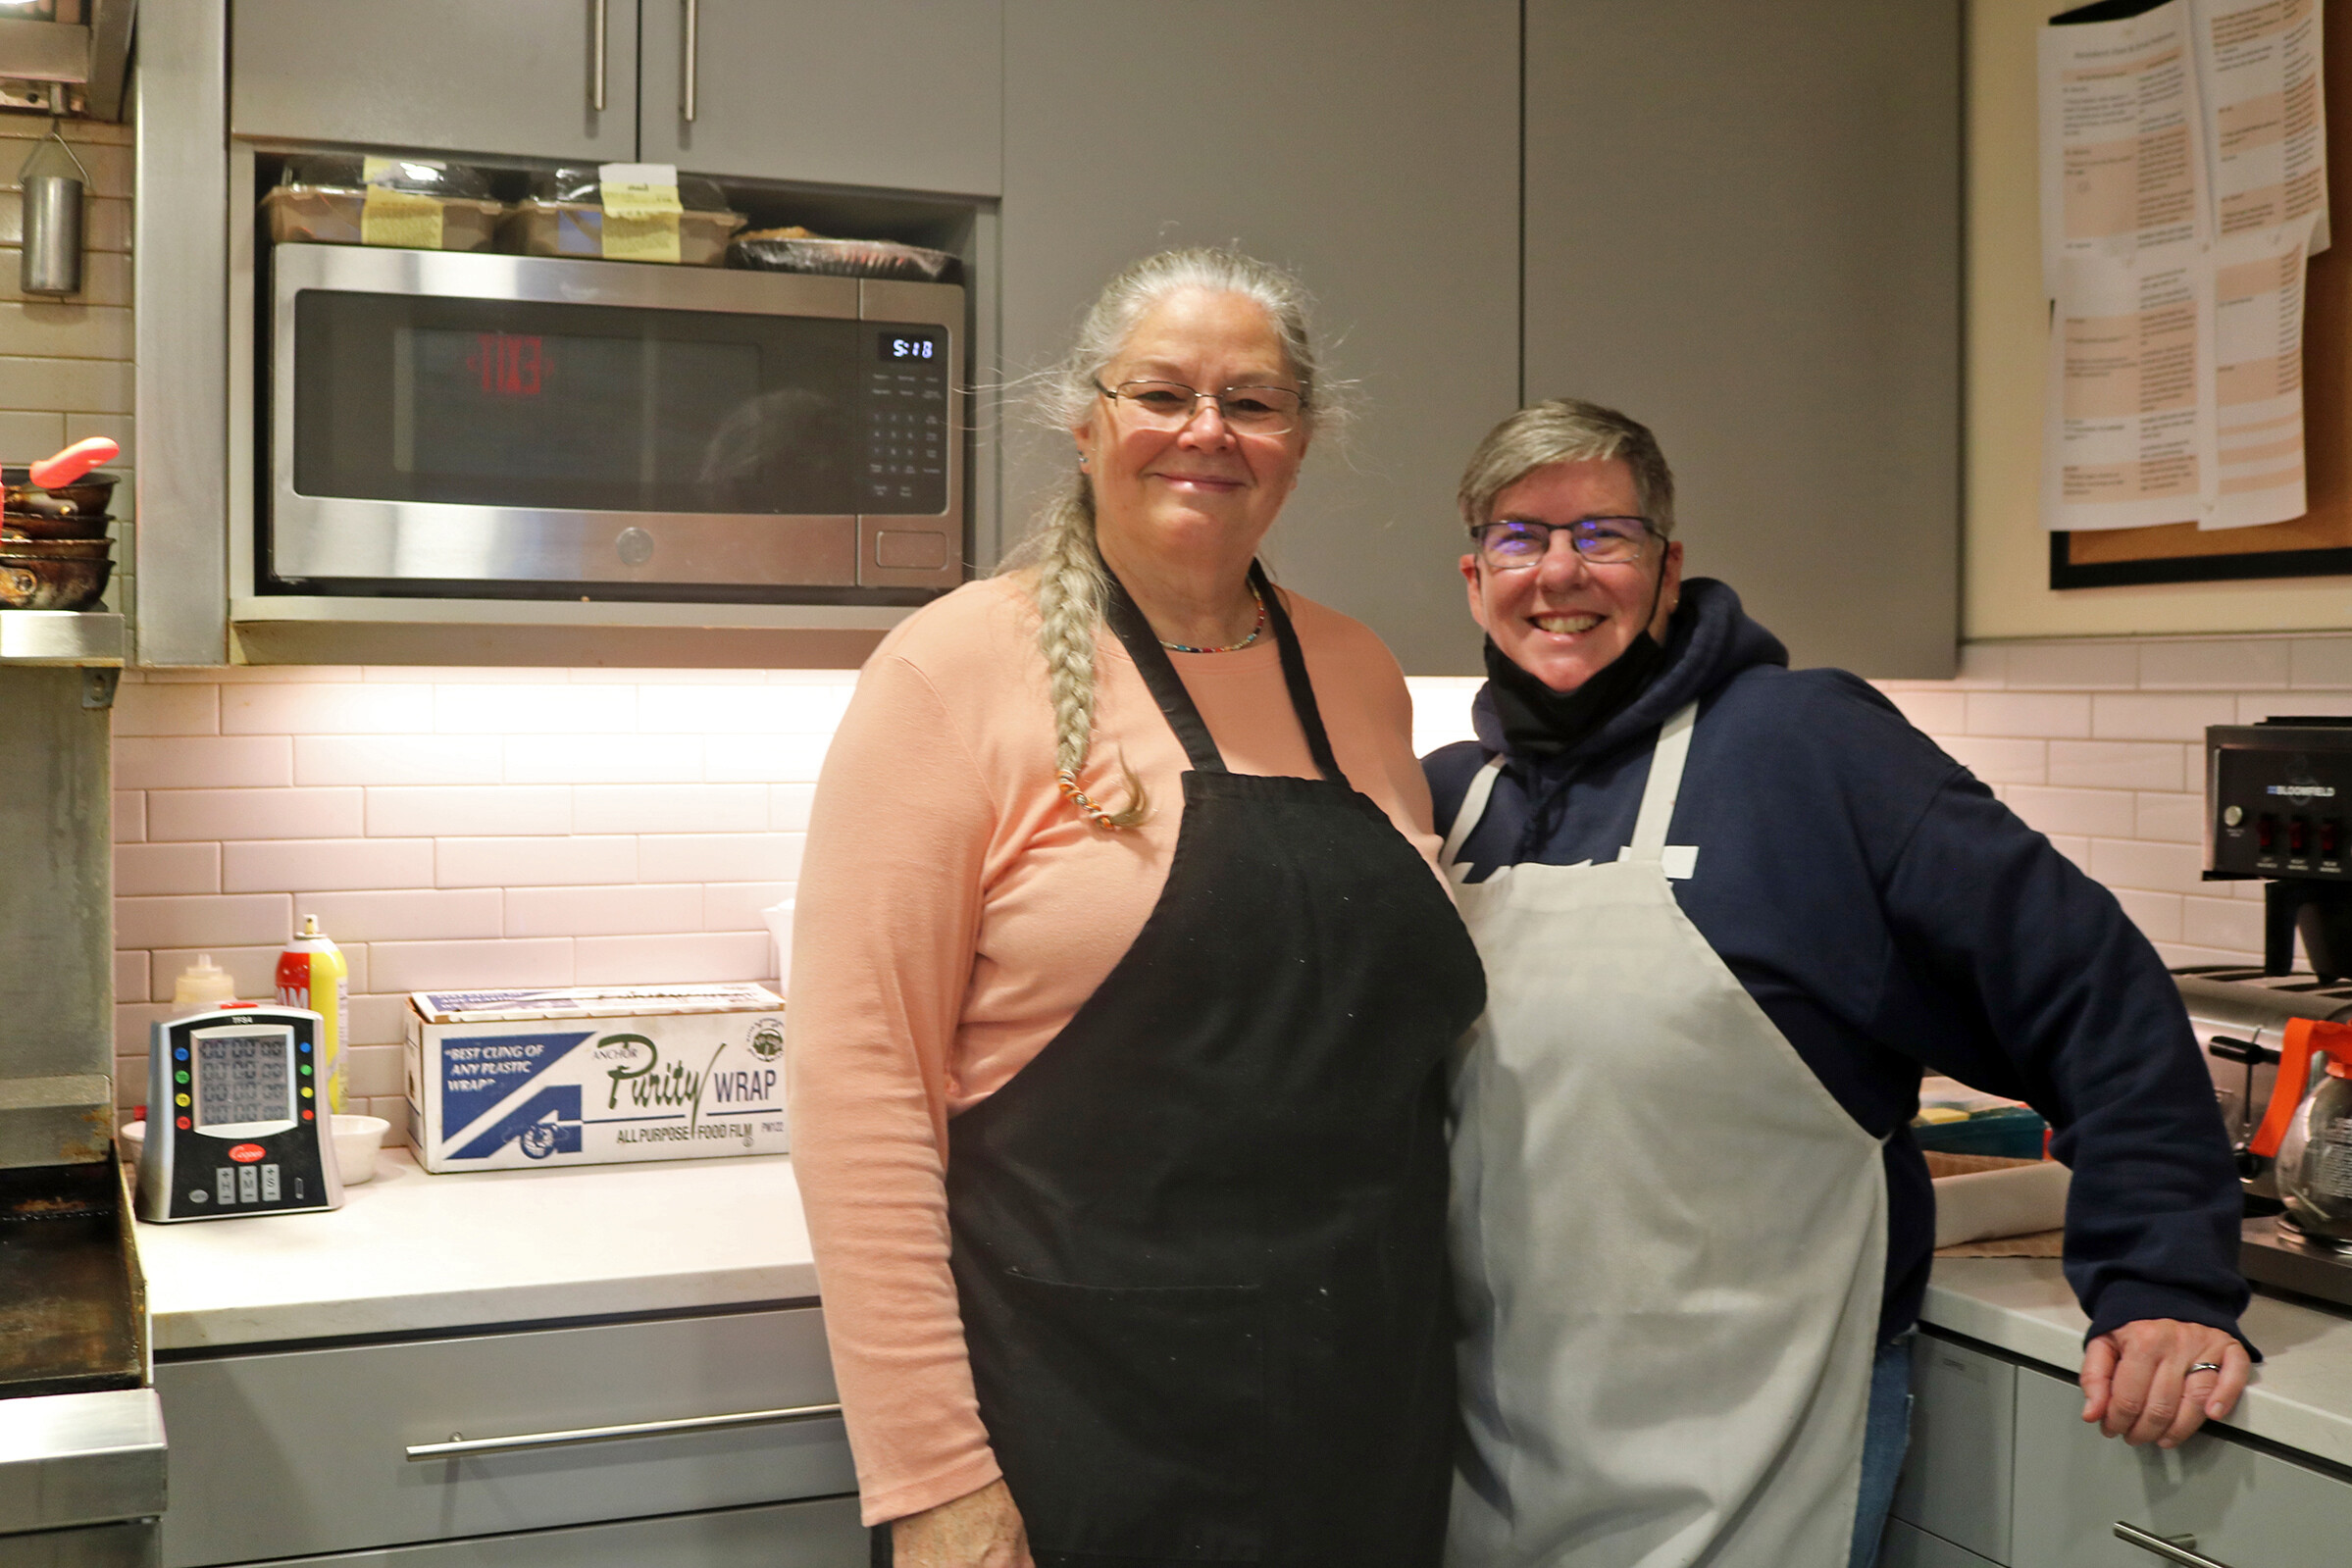 Volunteers Wanda Strickland (left) and Greta Getlein take a break during dinner preparations at Memory Care at Allen Brook in Williston.